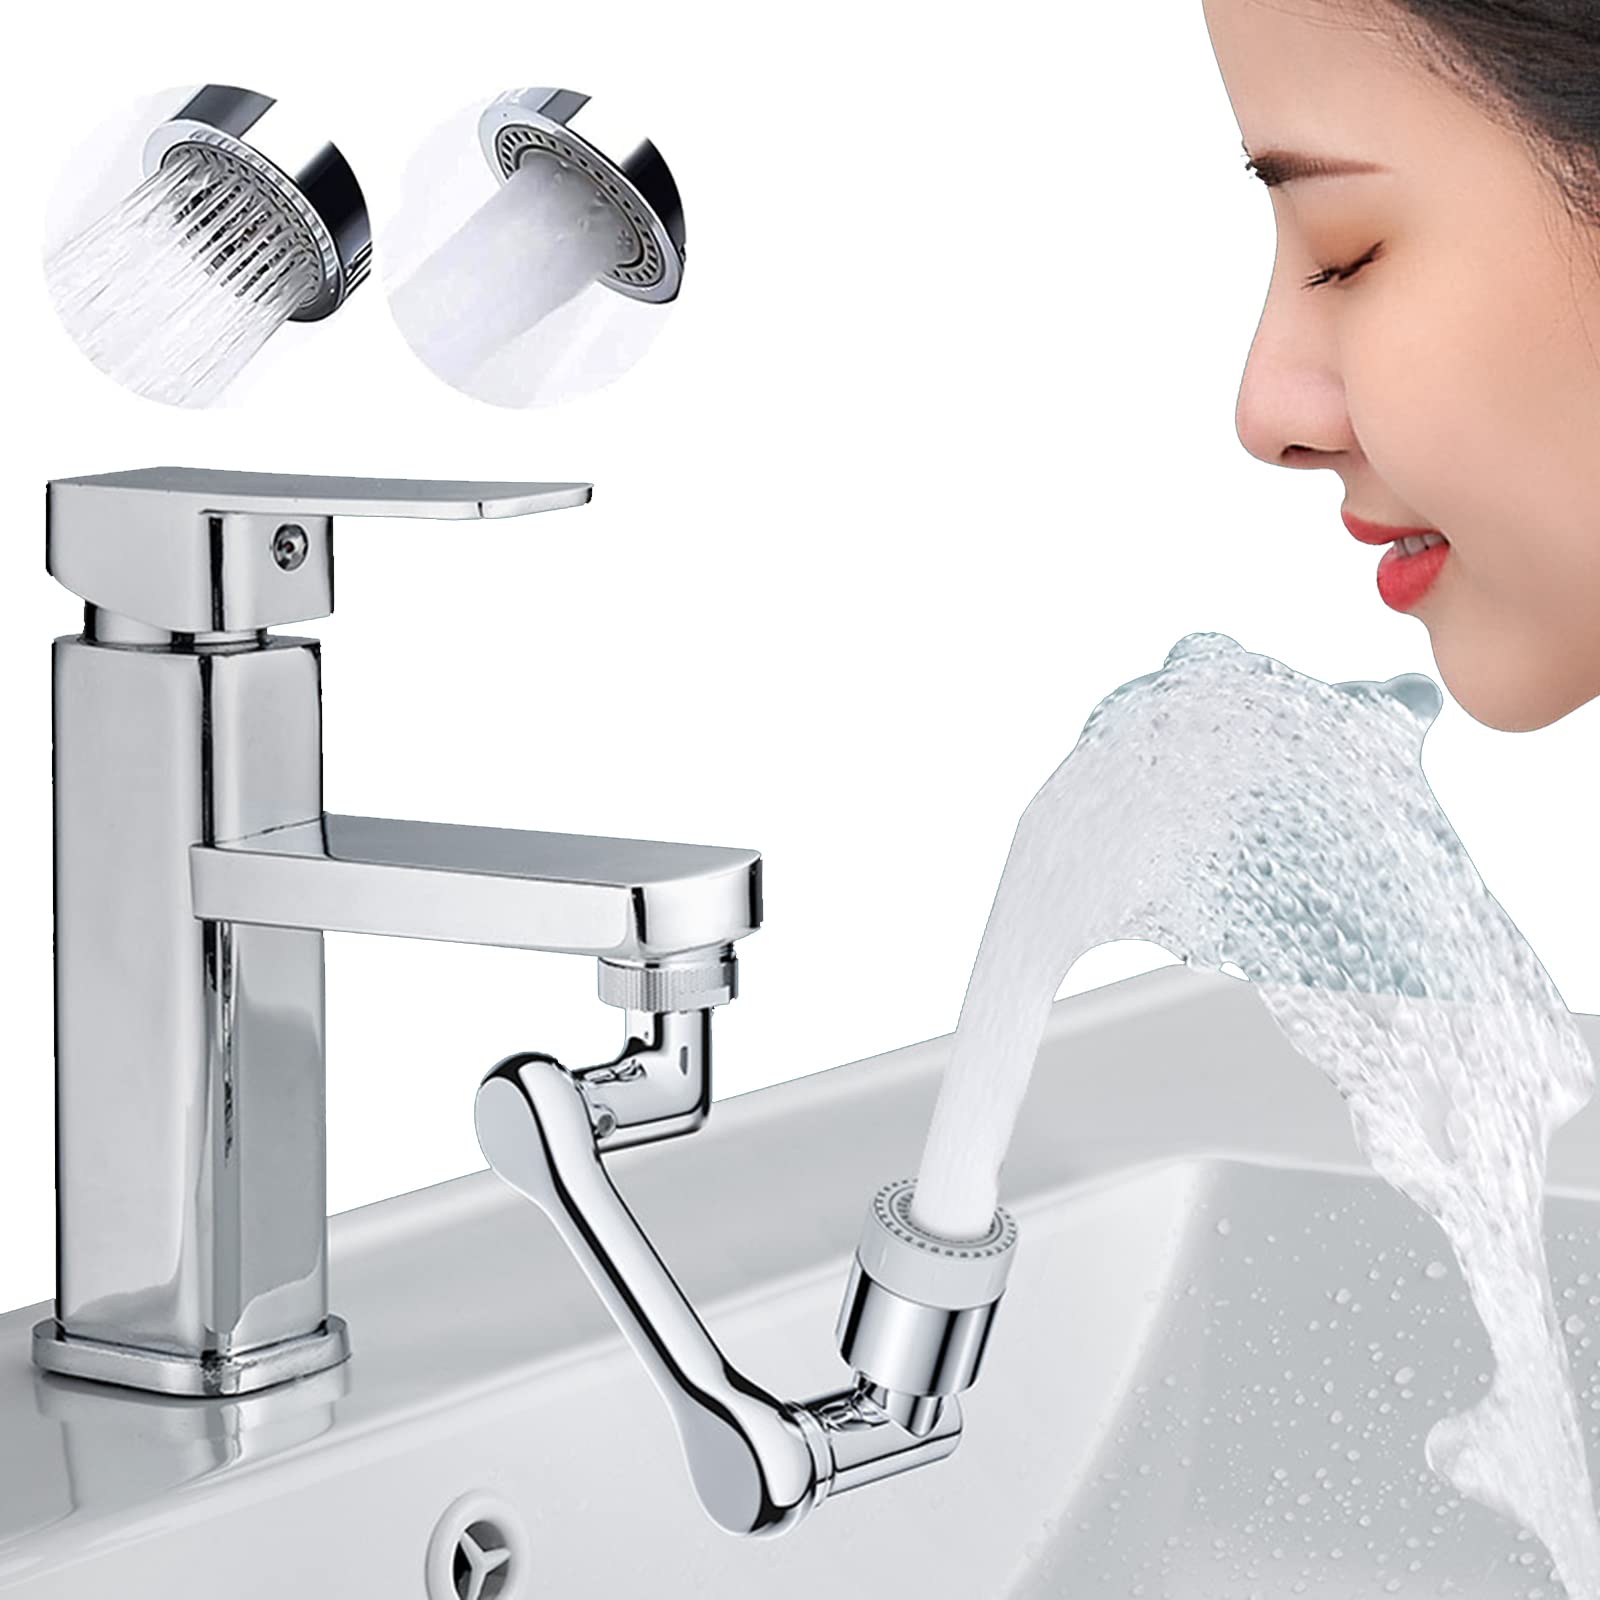 Netflip™ Rotating Sink Faucet 1080 degrees